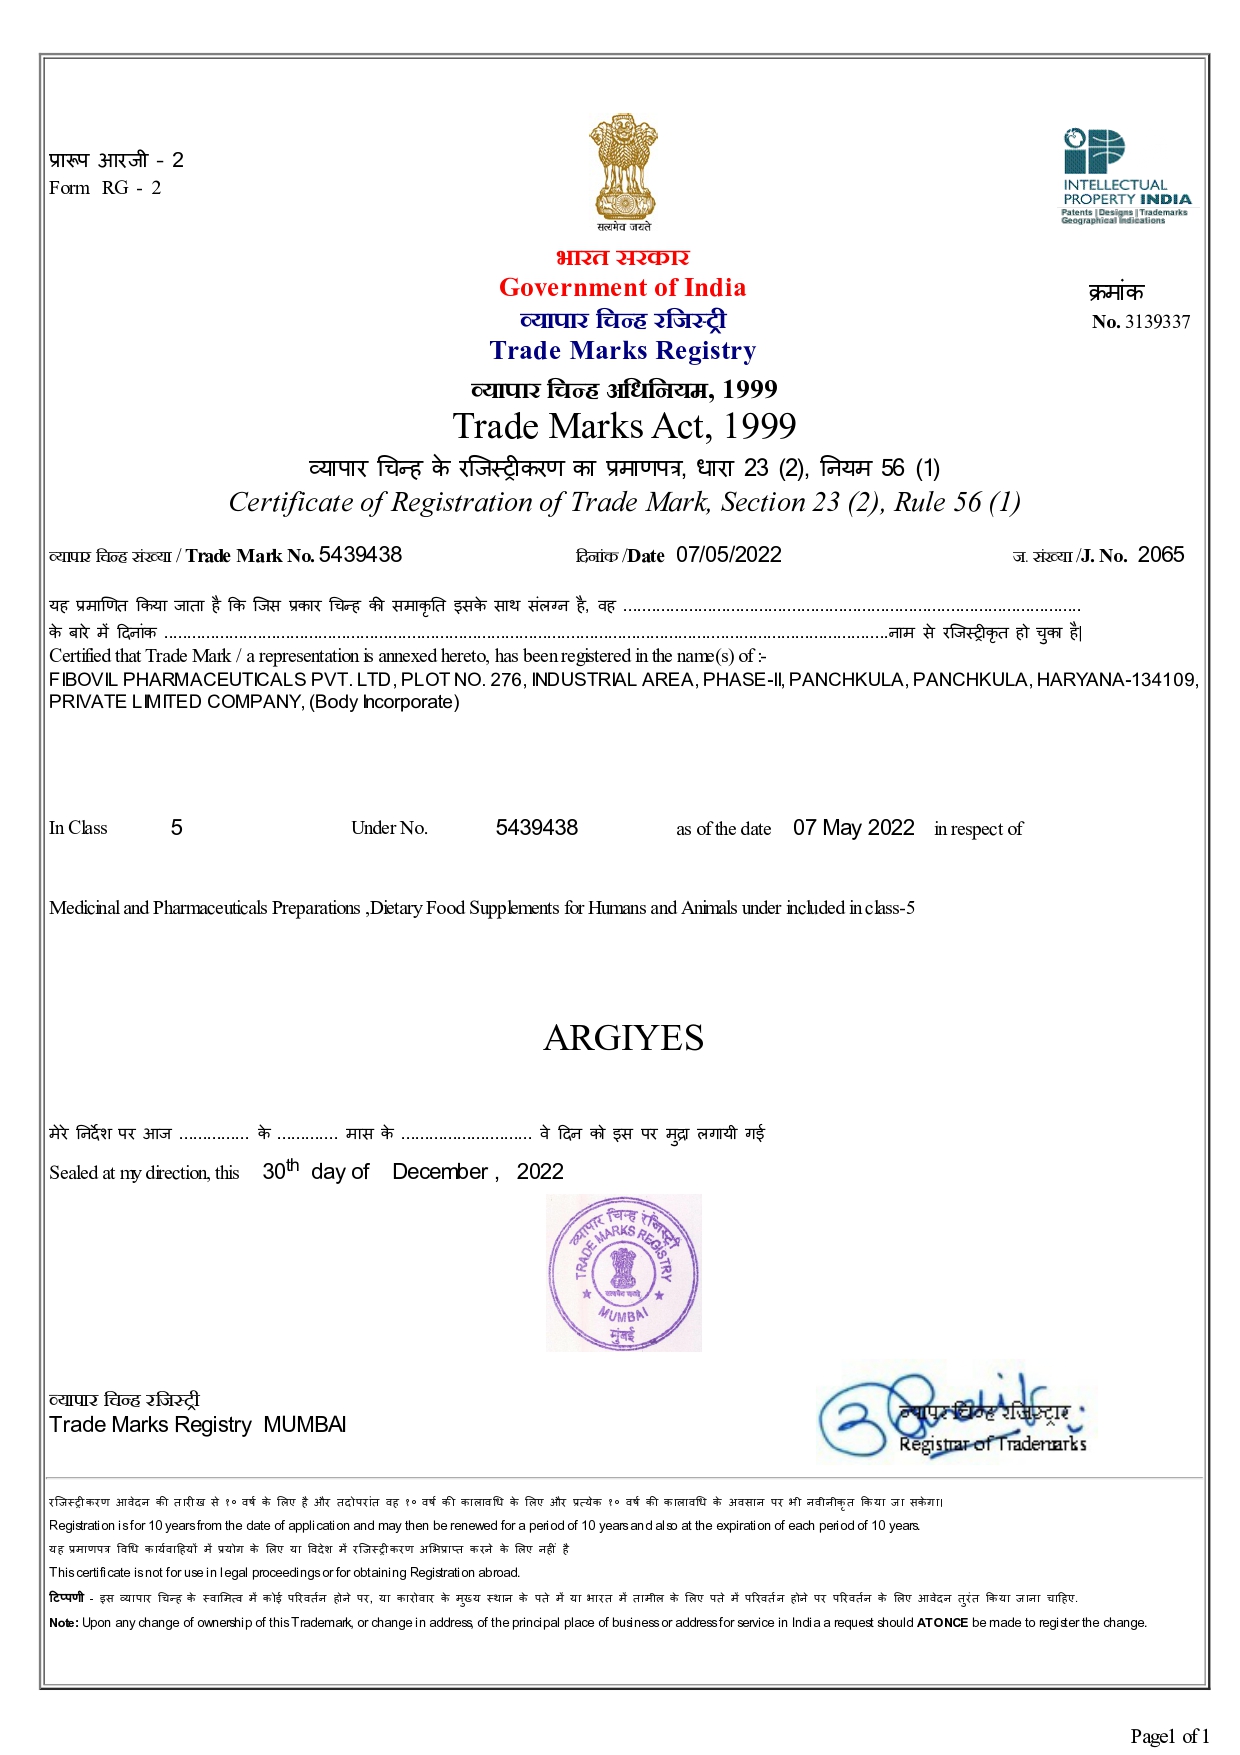 Registered Certificate of ARGIYES